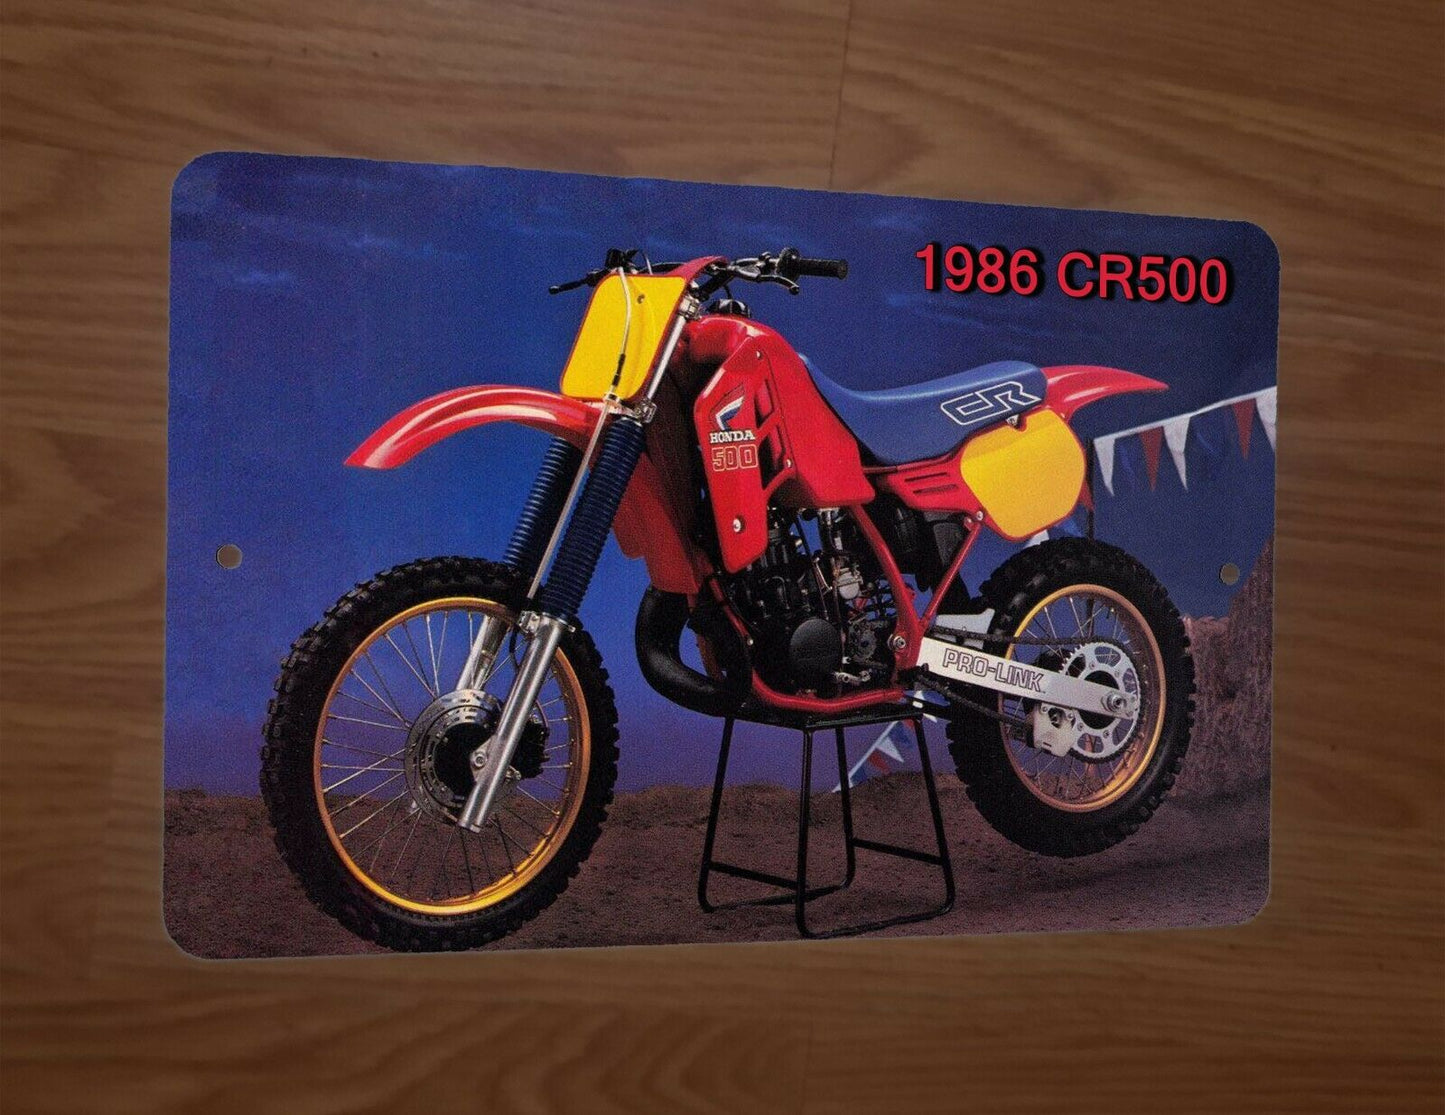 1986 Honda CR500 Motocross Motorcycle Dirt Bike Photo 8x12 Metal Wall Sign Garage Poster